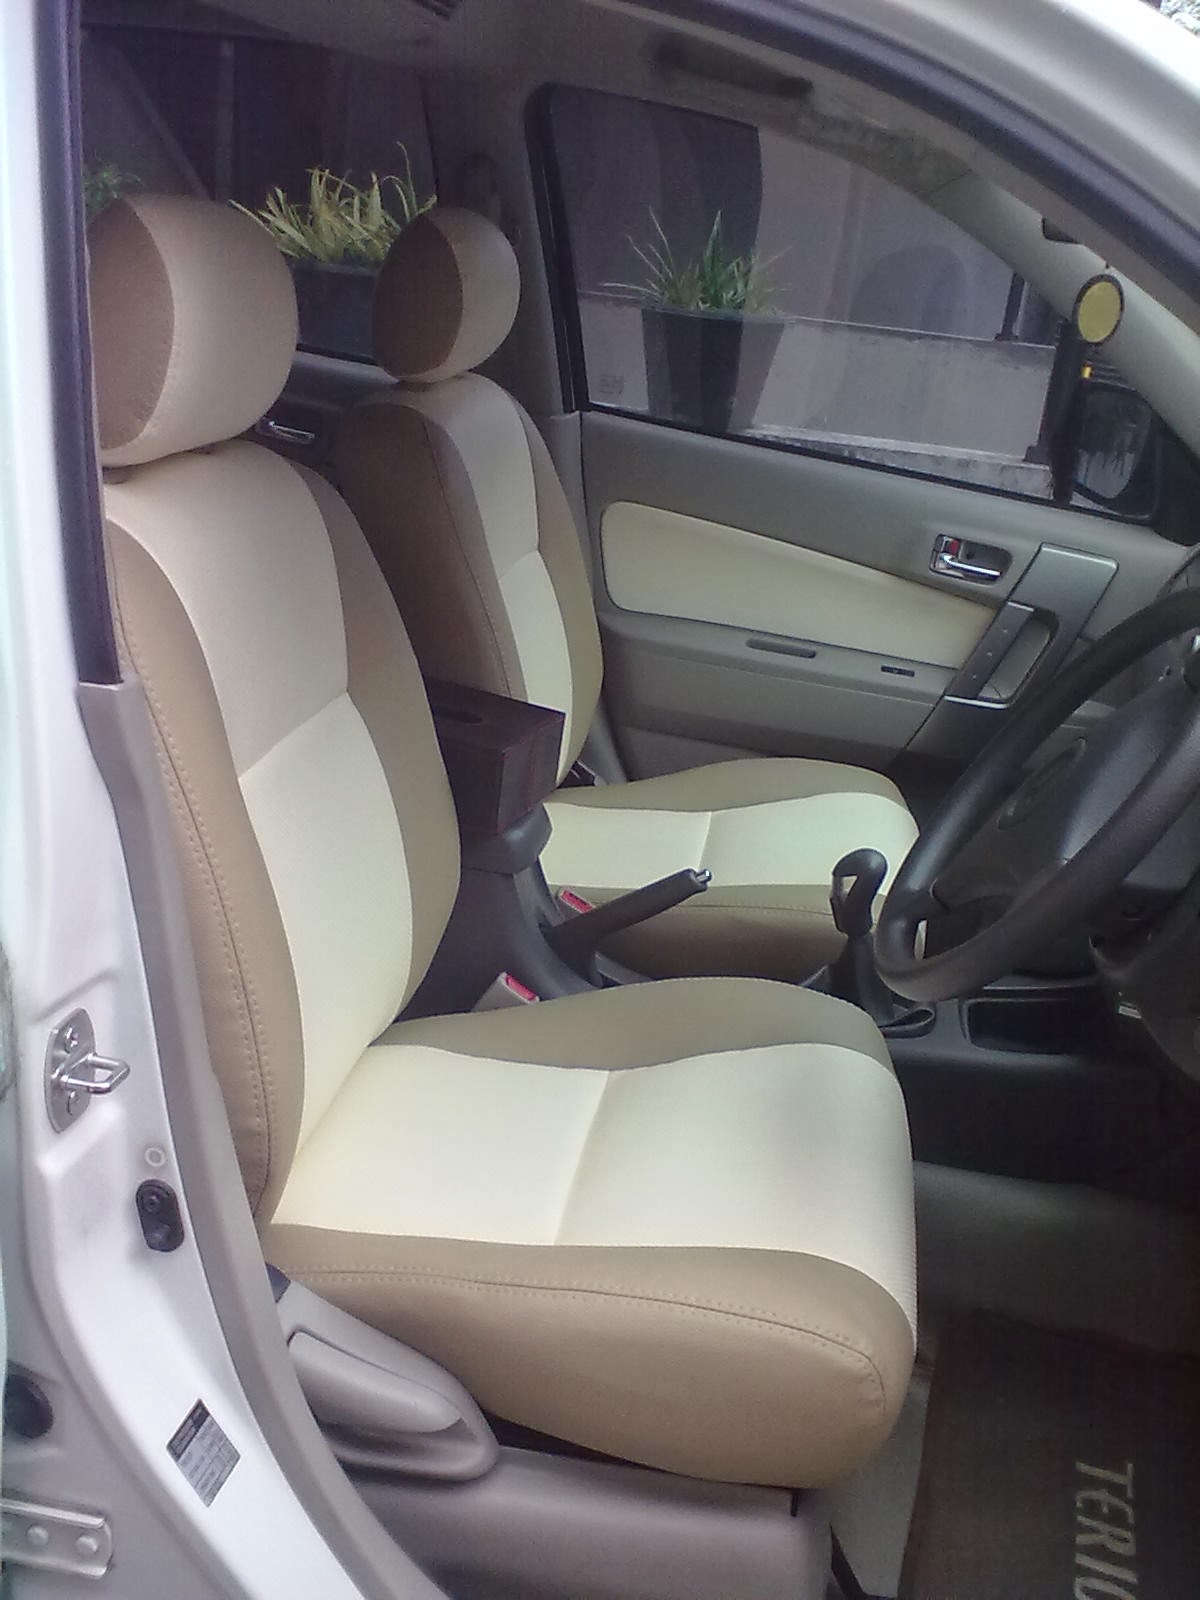 98 Modifikasi Interior Mobil Avanza Elegant 2018 Modifikasi Mobil